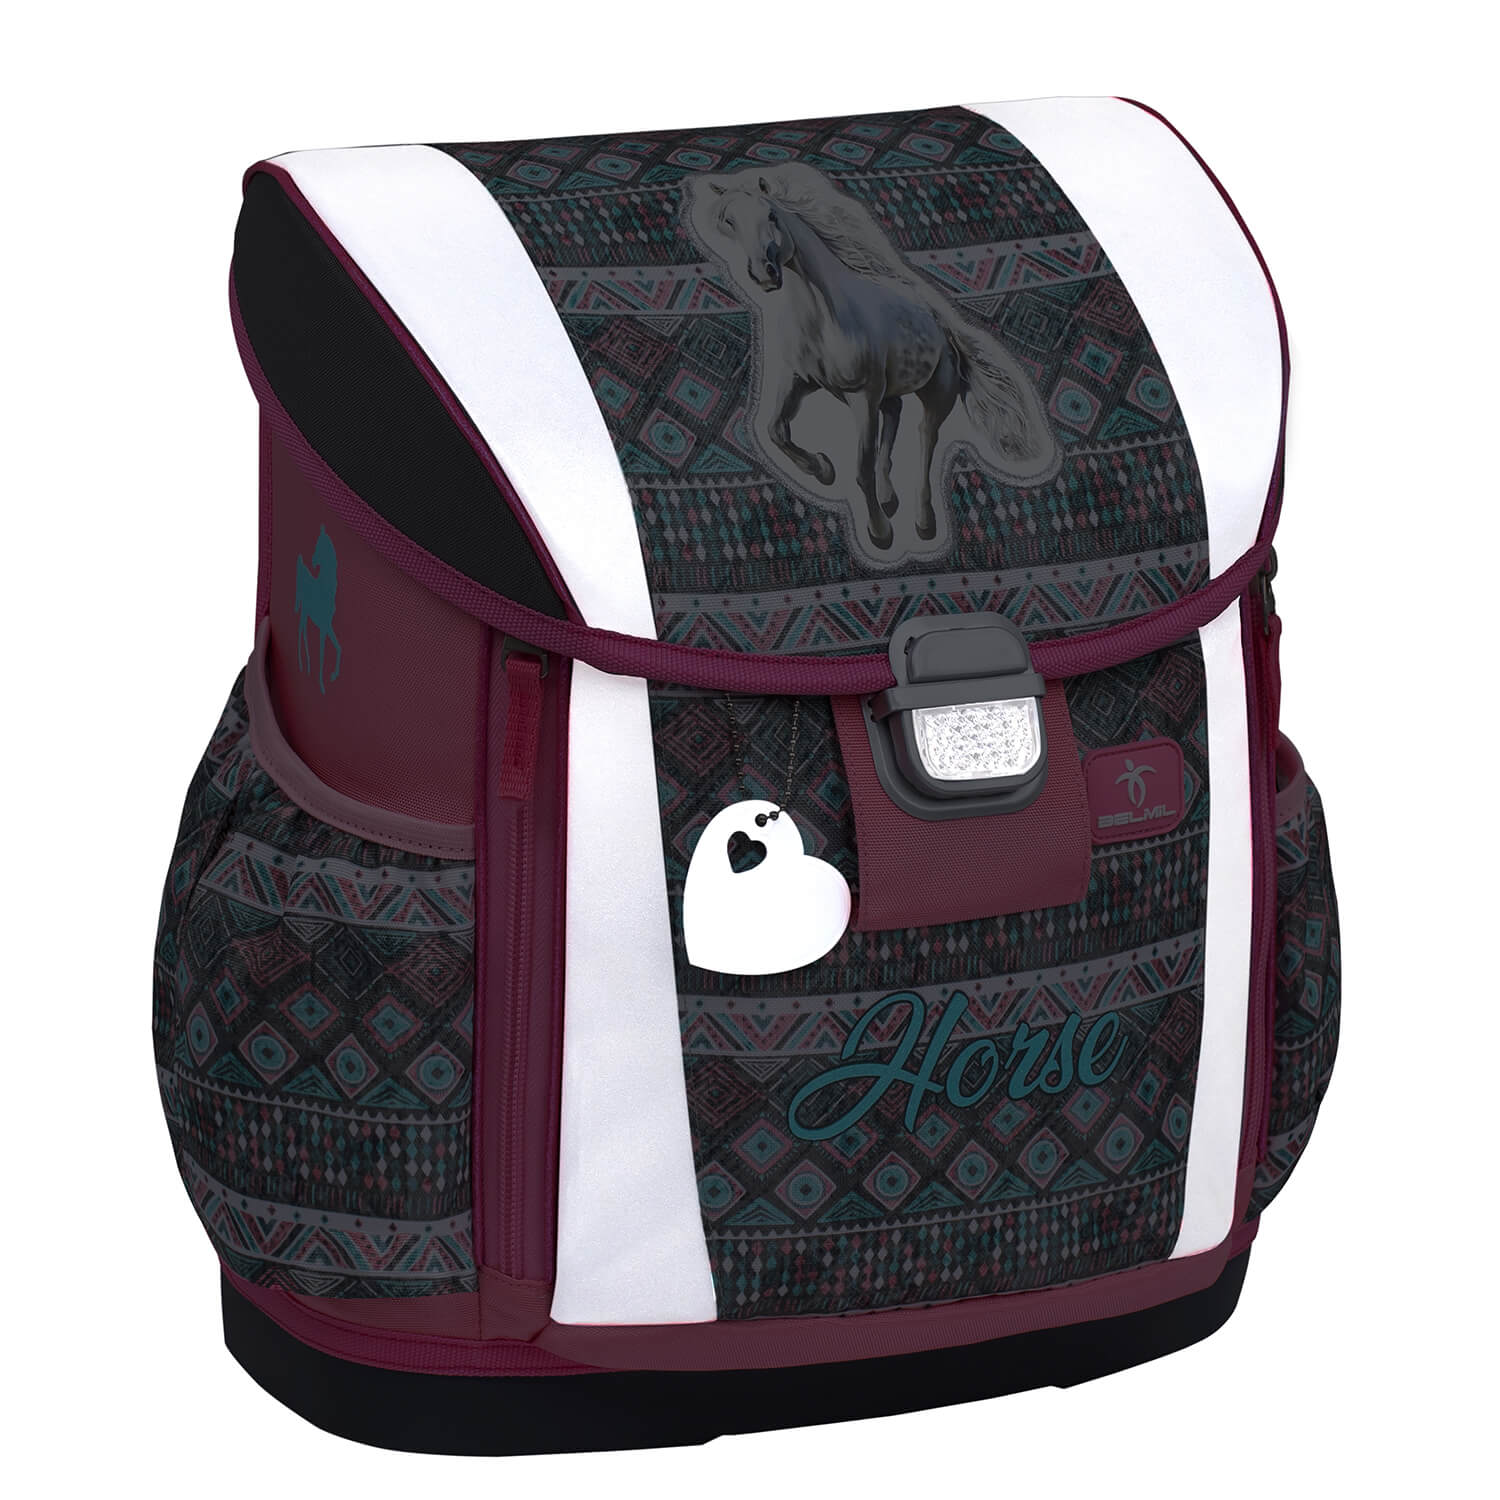 Customize Me Horse Aruba Blue schoolbag set 5 pcs